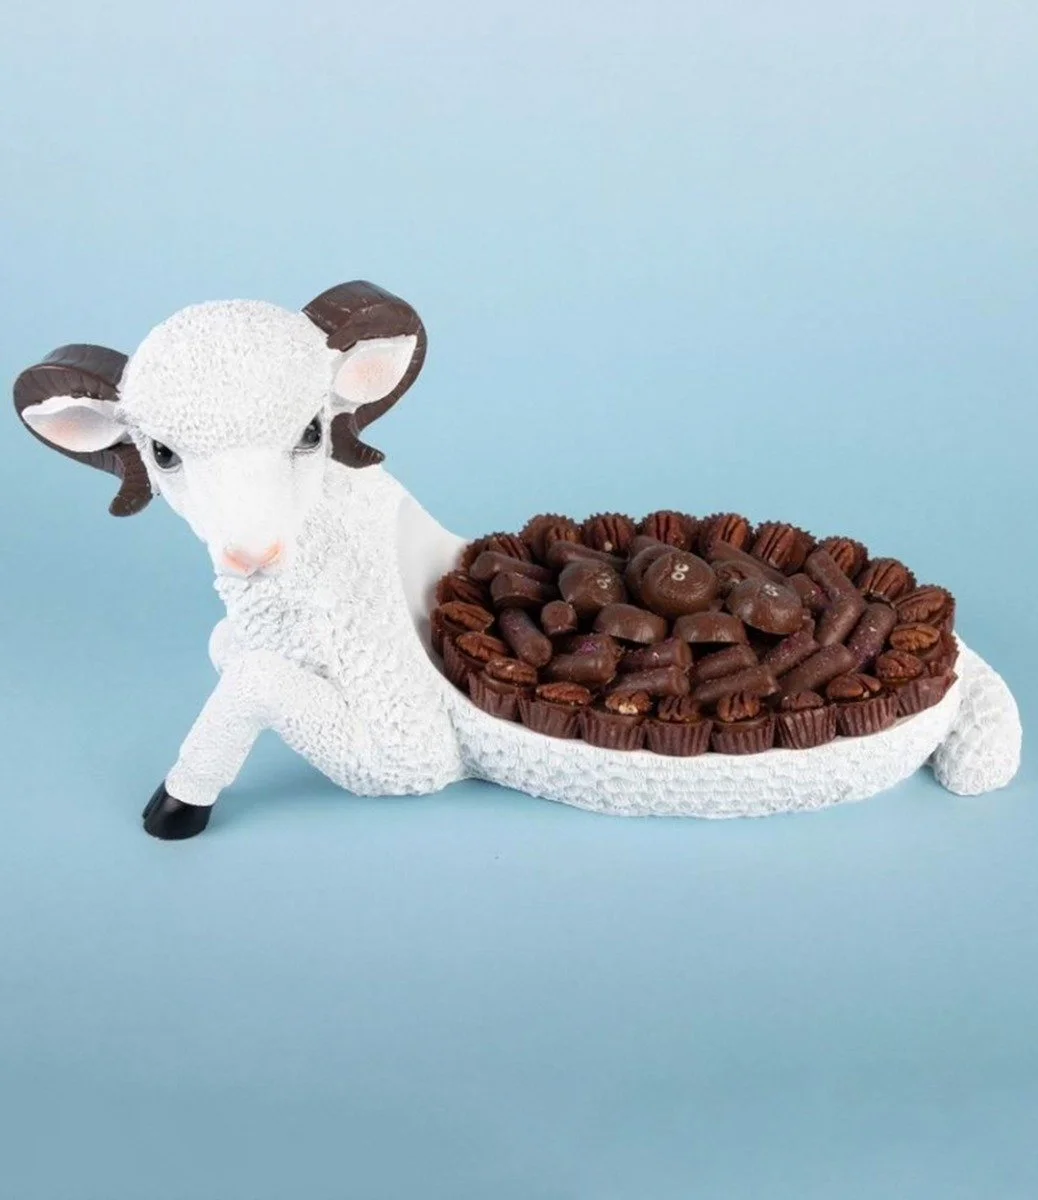 Lamb-shaped Luxury Belgian Chocolate Tray